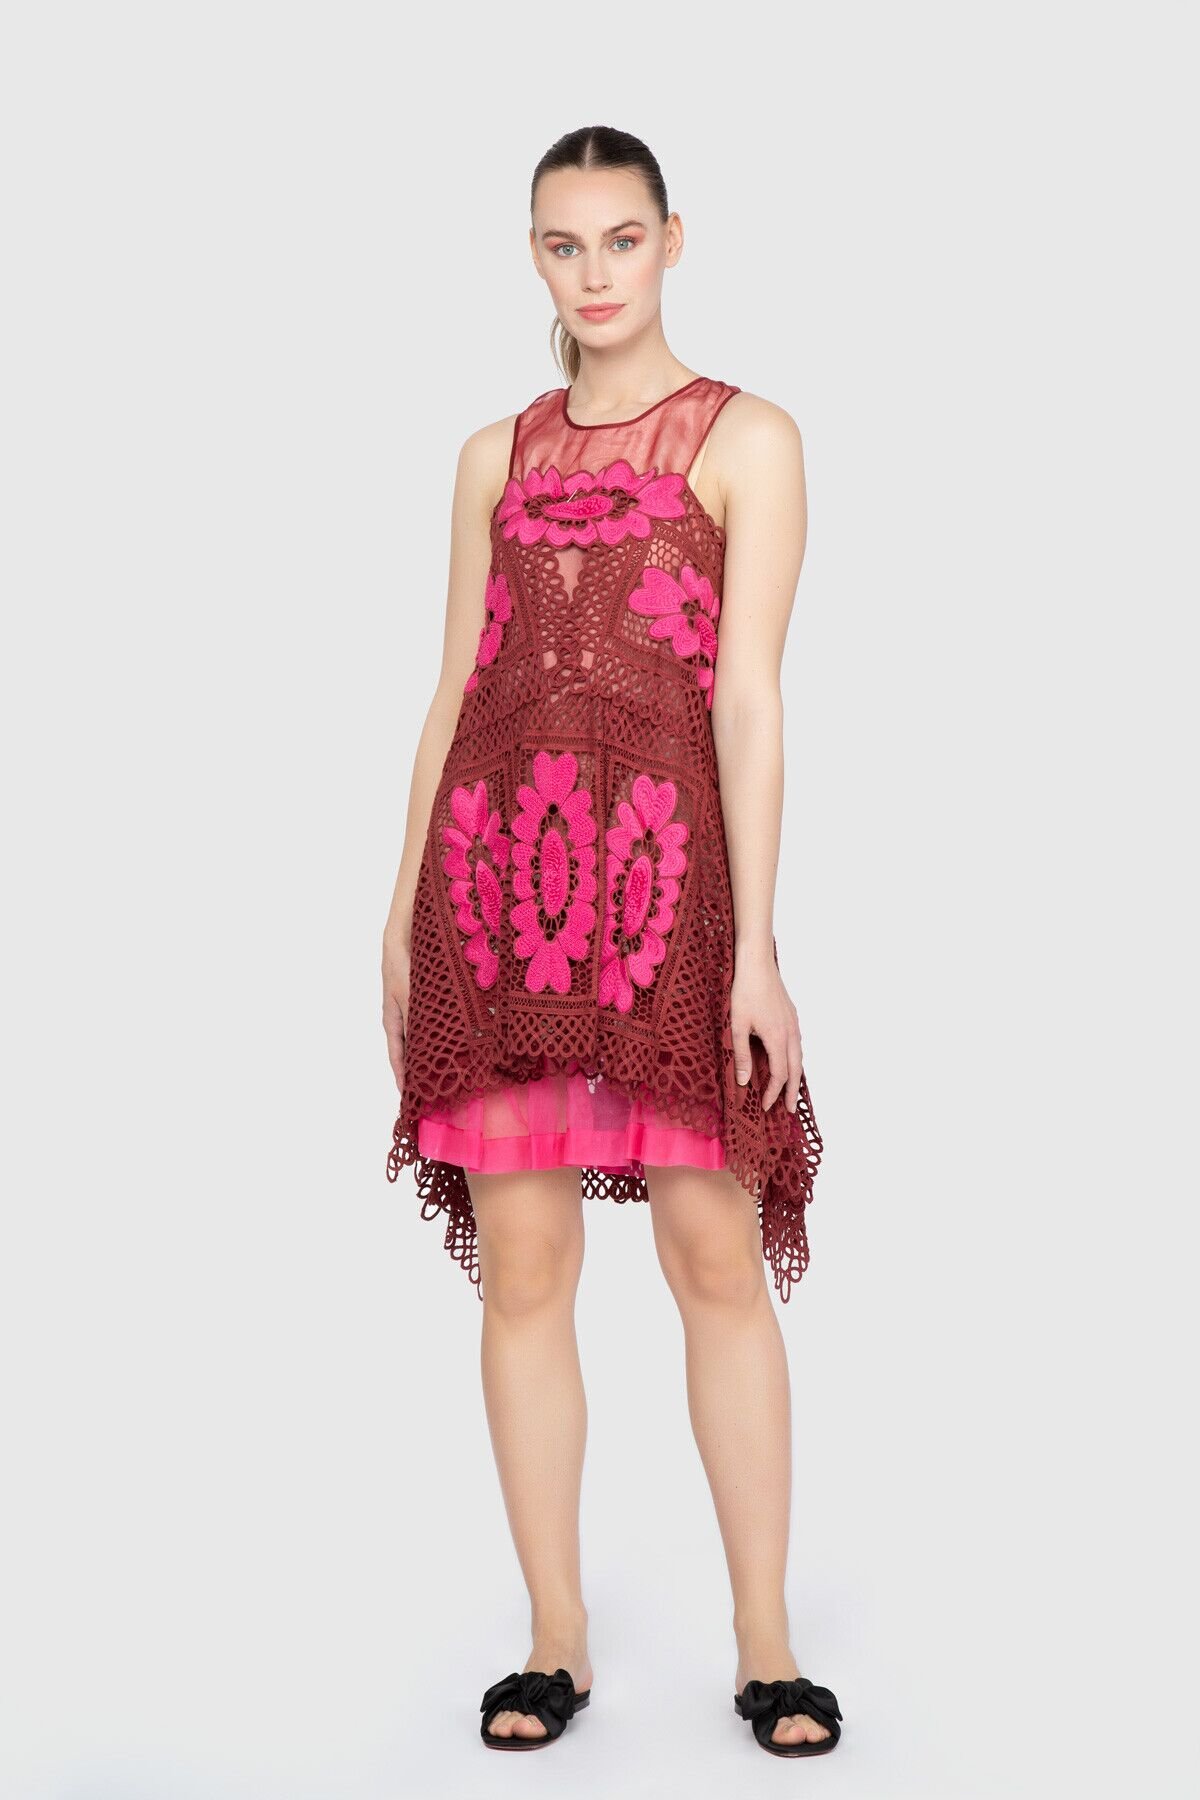 Sheer Detailed Sleeveless Above Knee Red Pink Dress